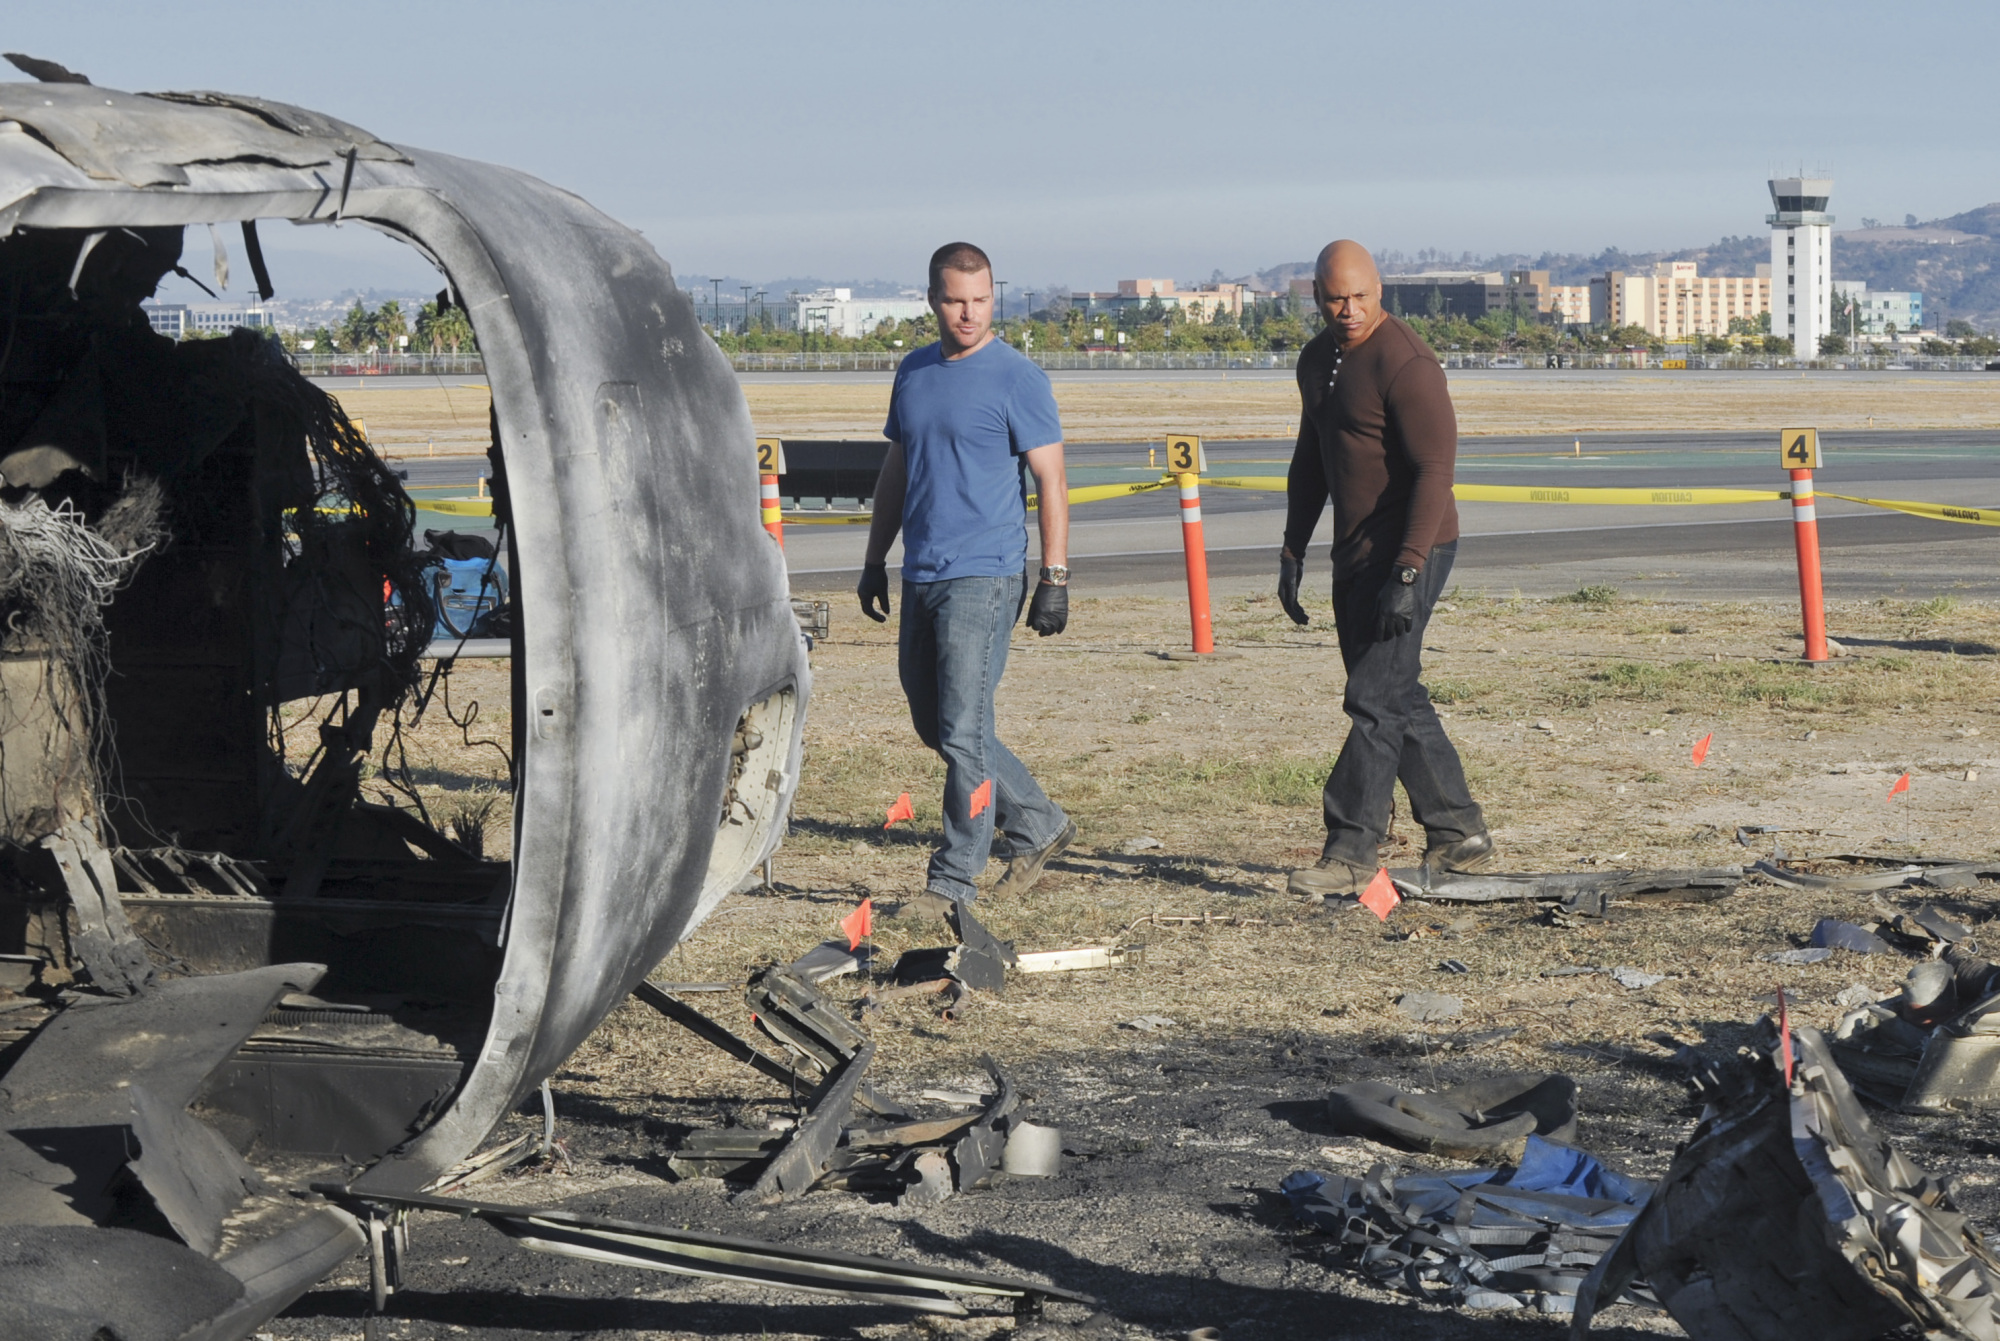 NCIS: Los Angeles Season Five Episode Two "Impact" Promo Picture